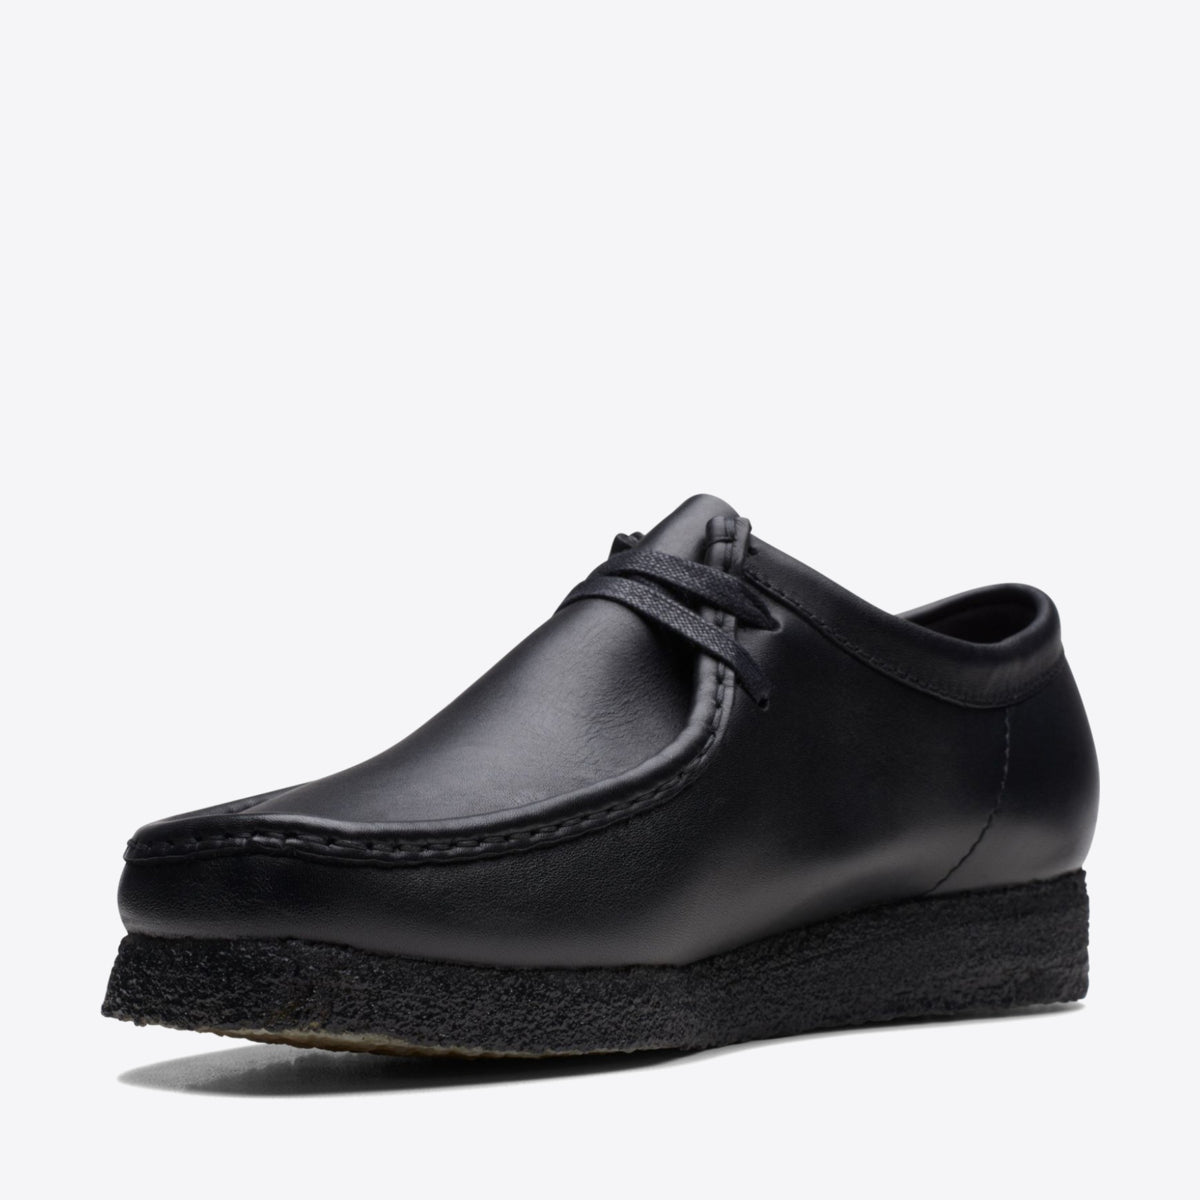 CLARKS Wallabee Shoe Leather Black - Image 4